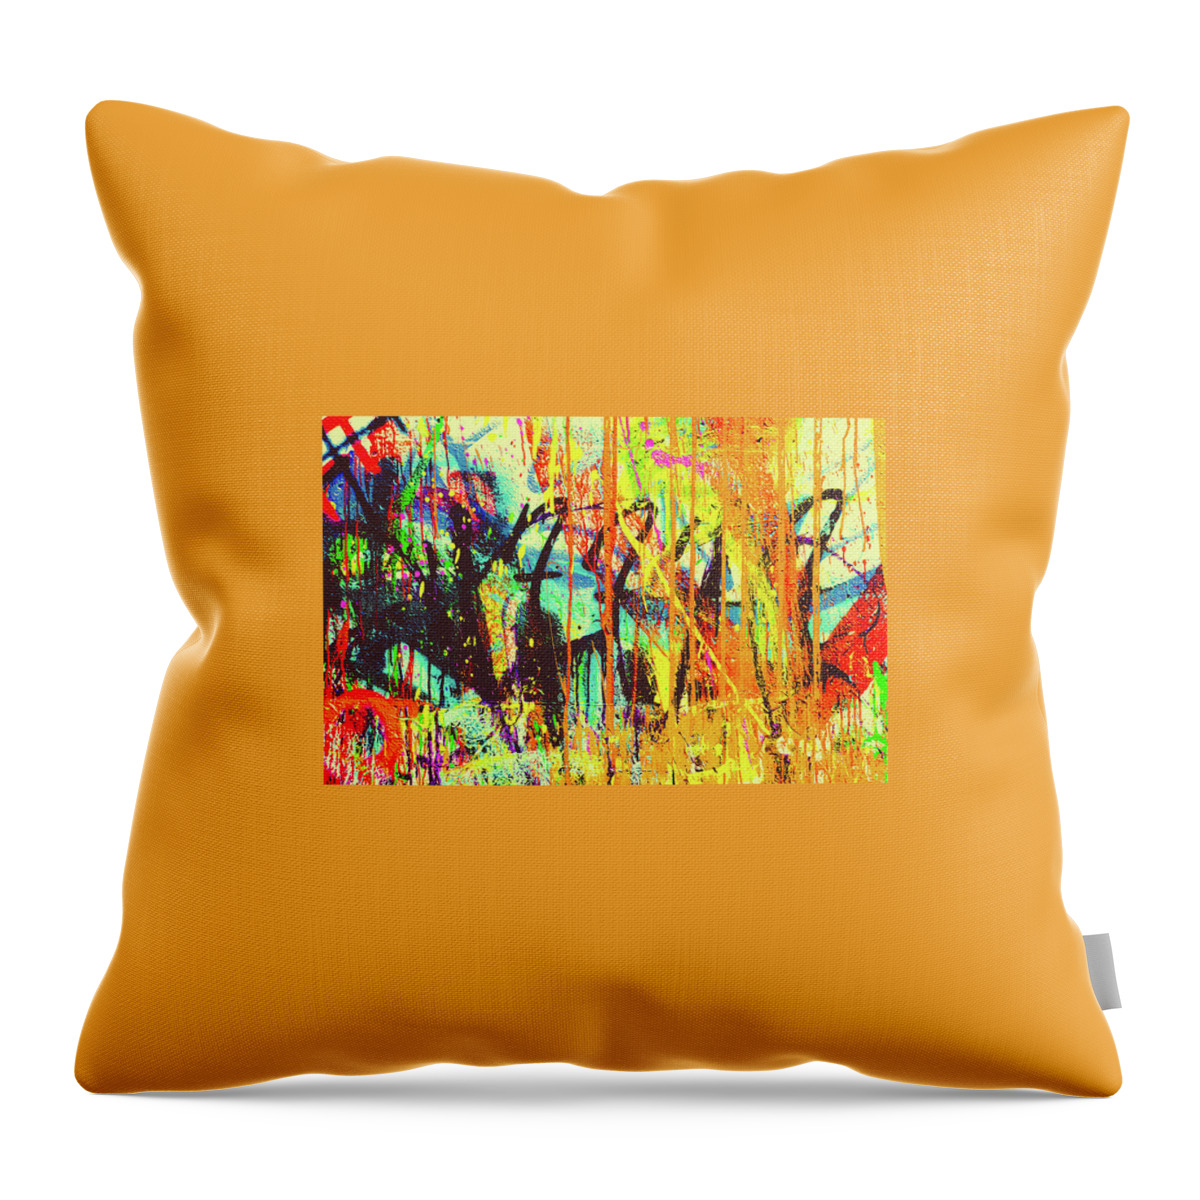 #createexplore Throw Pillow featuring the digital art Excitement by Ken Sexton